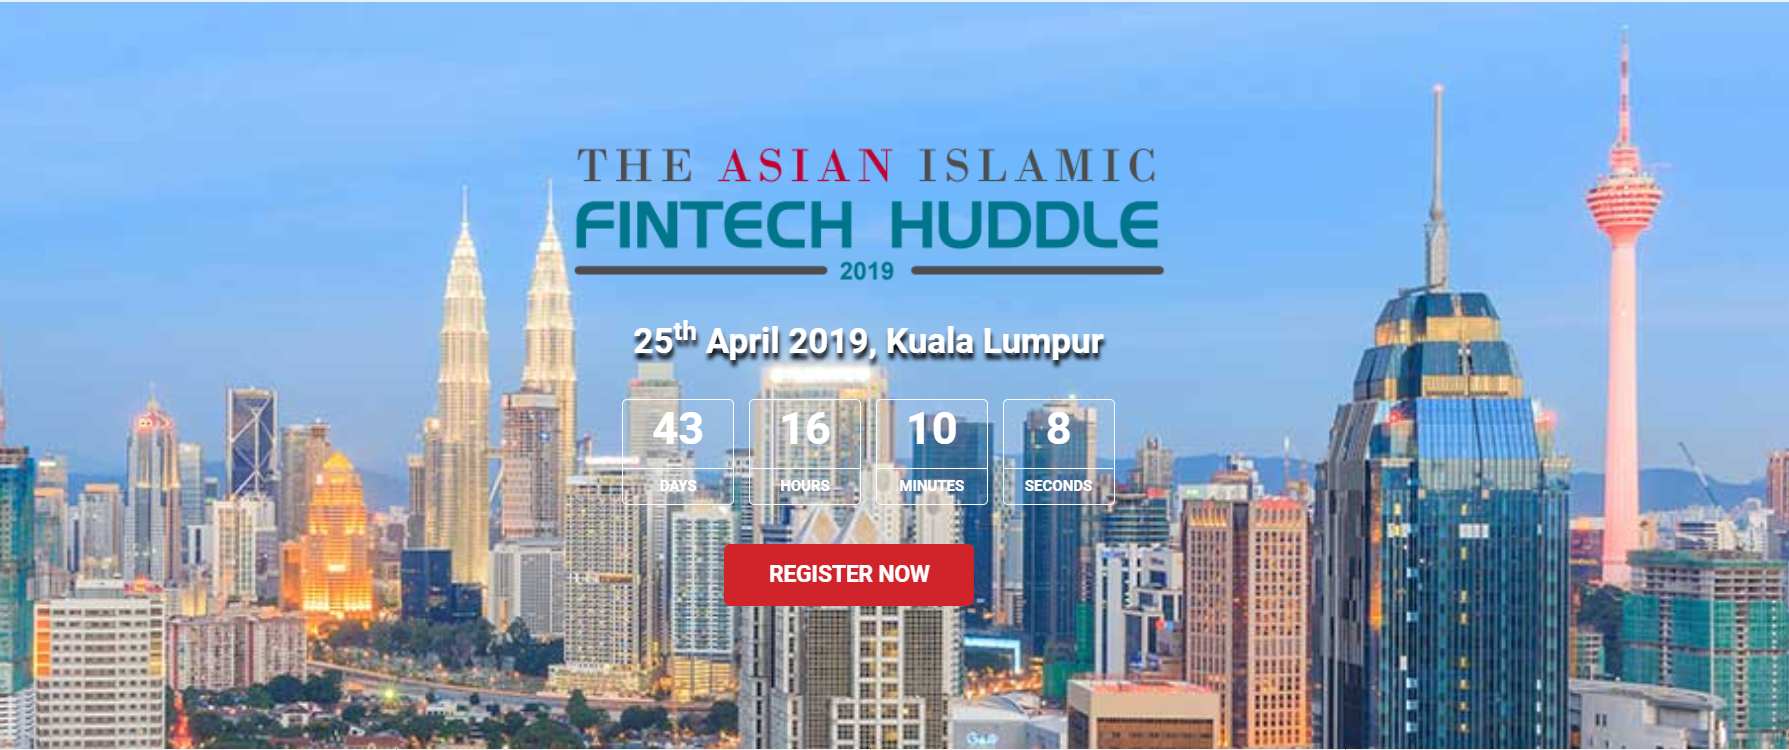 the asian islamic fintech huddle 2019